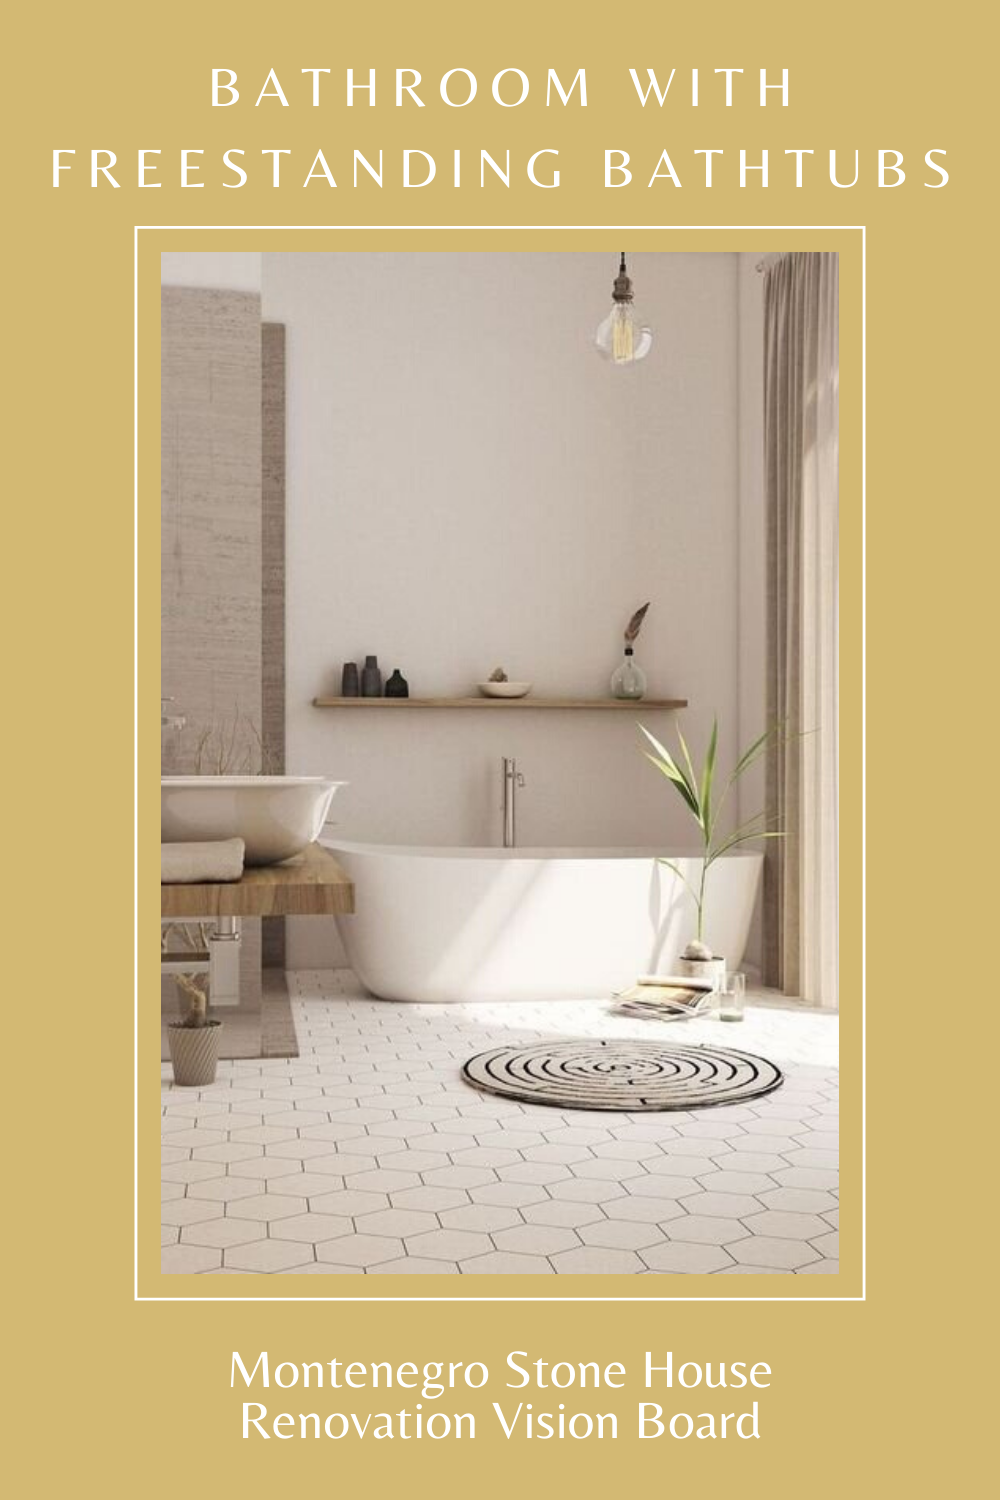 Bathroom with Freestanding Bathtubs Design Ideas.png